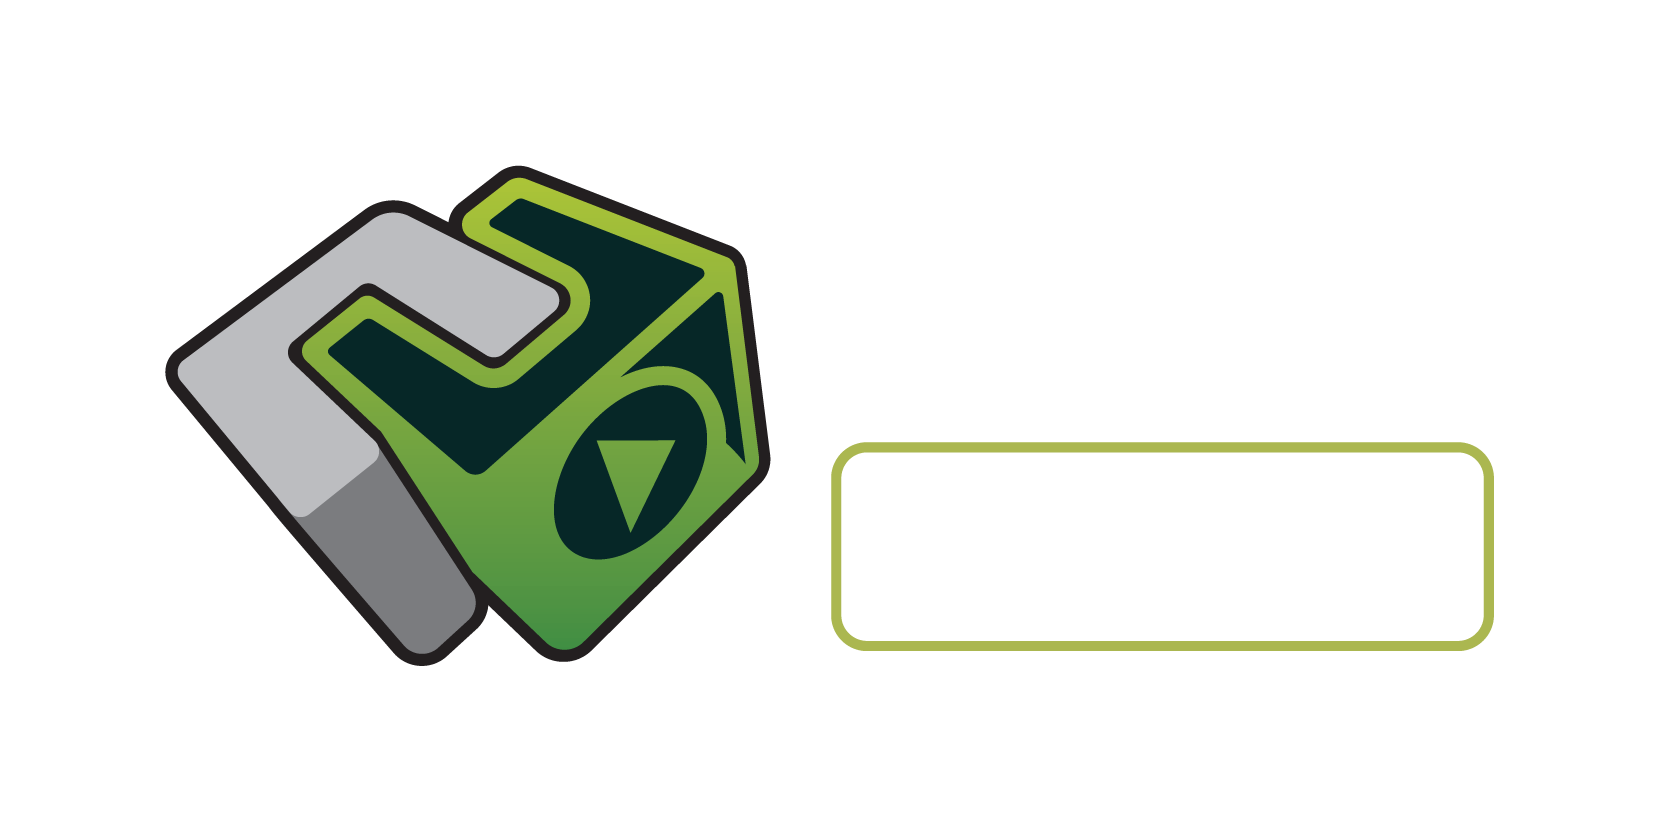 logo_vts_player_dark.png (62 KB)